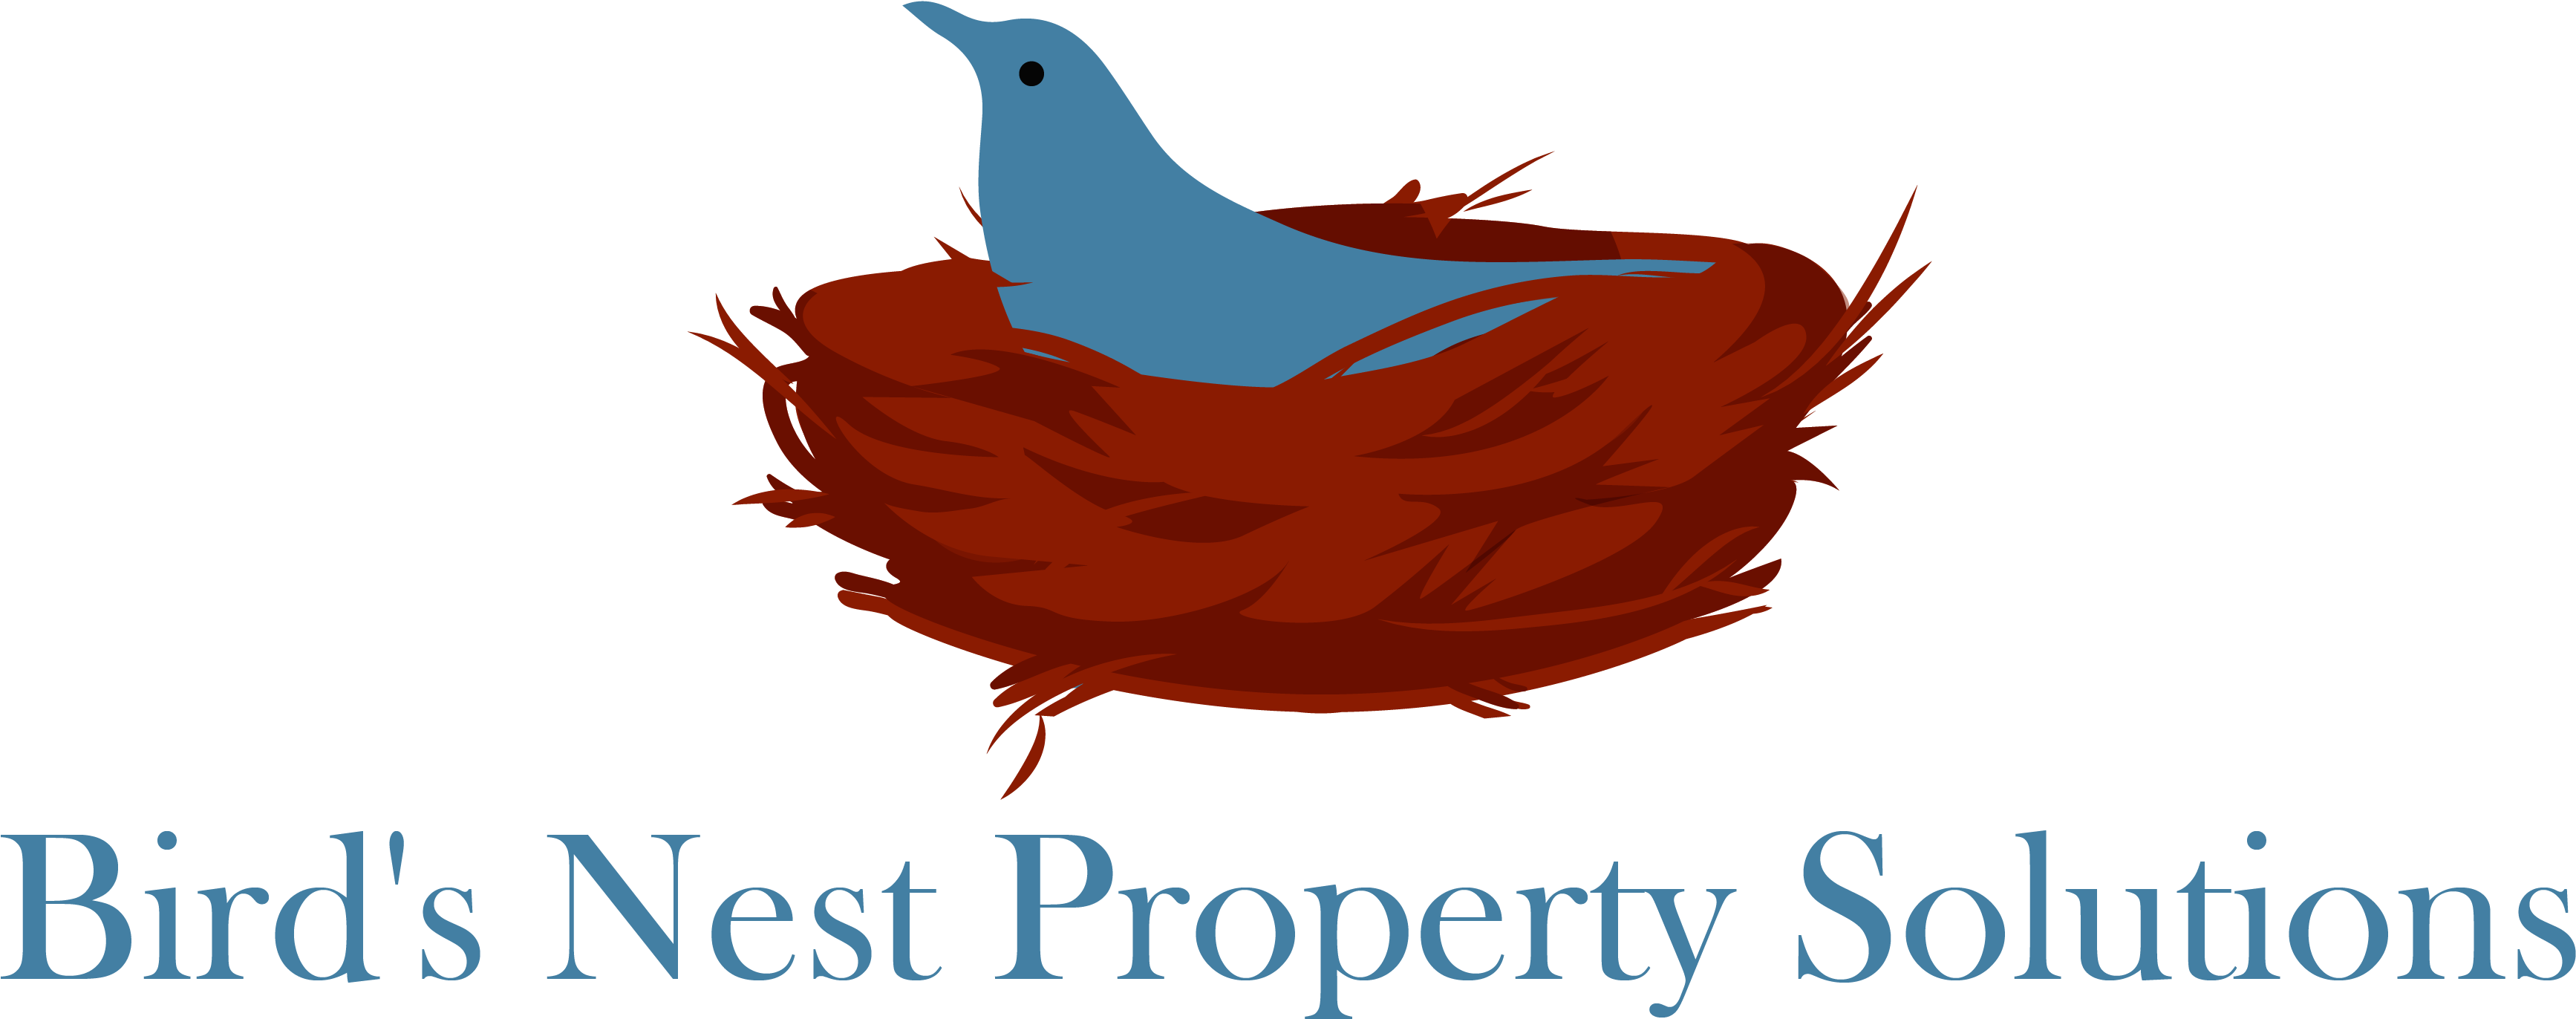 Bird's Nest Property Solutions - Association Trends (3486x1394), Png Download